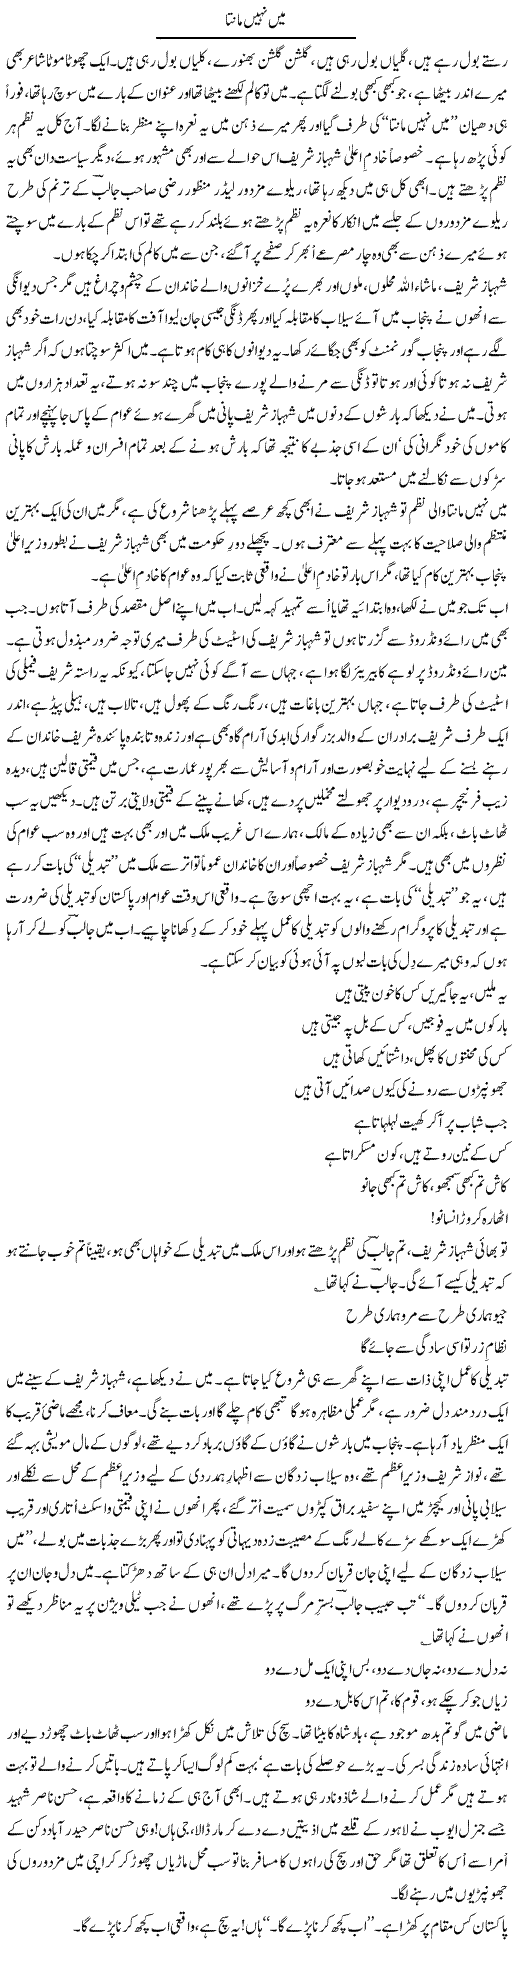 Shahbaz Sharif Express Column Saeed Pervez 6 January 2012